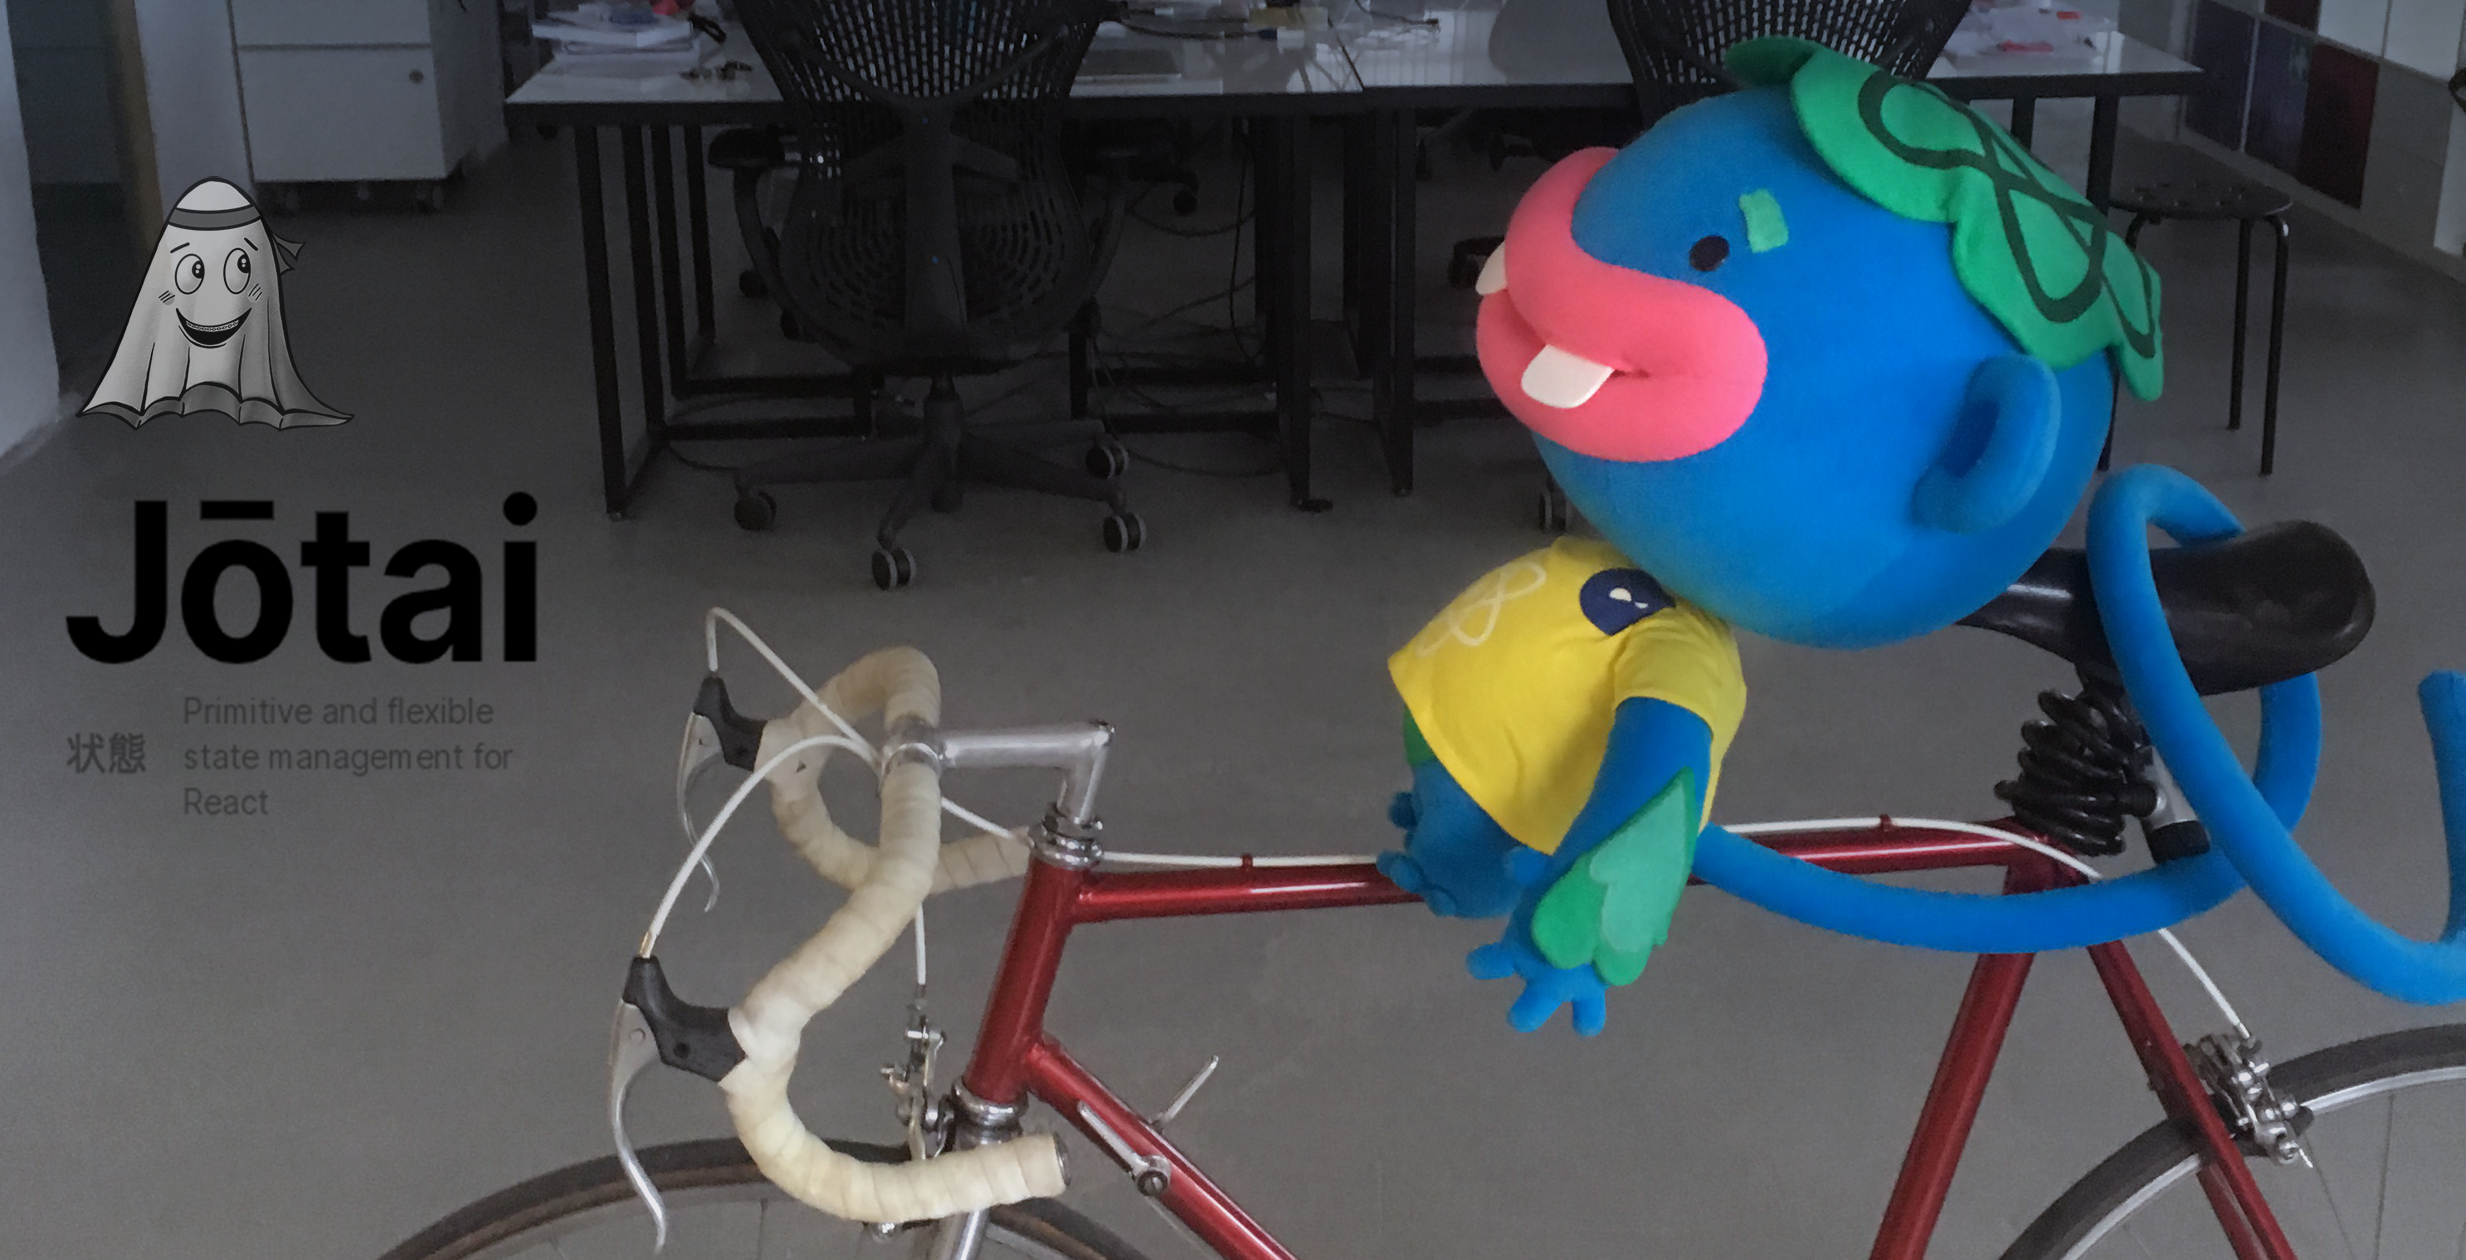 The Despark React monkey on a bike with the Jotai logo